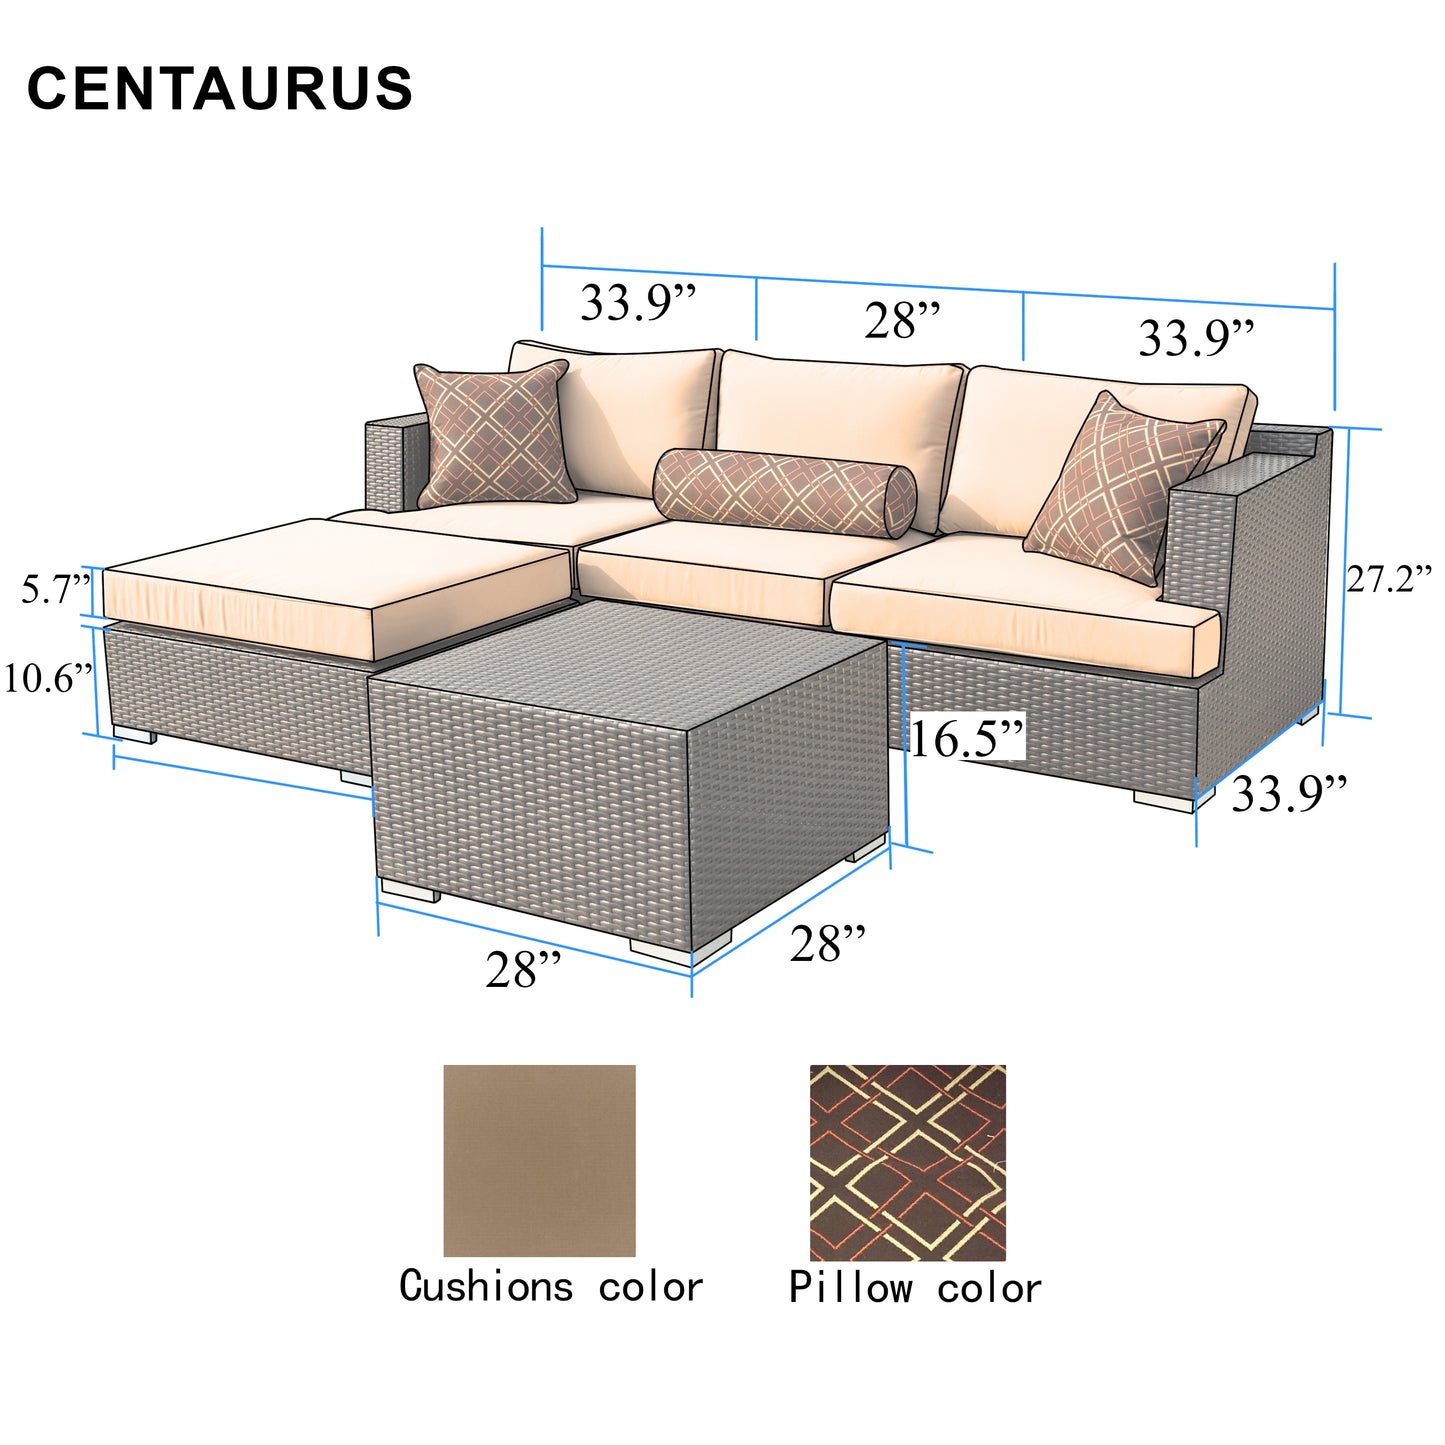 Centaurus Collection - 5-piece Seating Set with Sunbrella Cushions